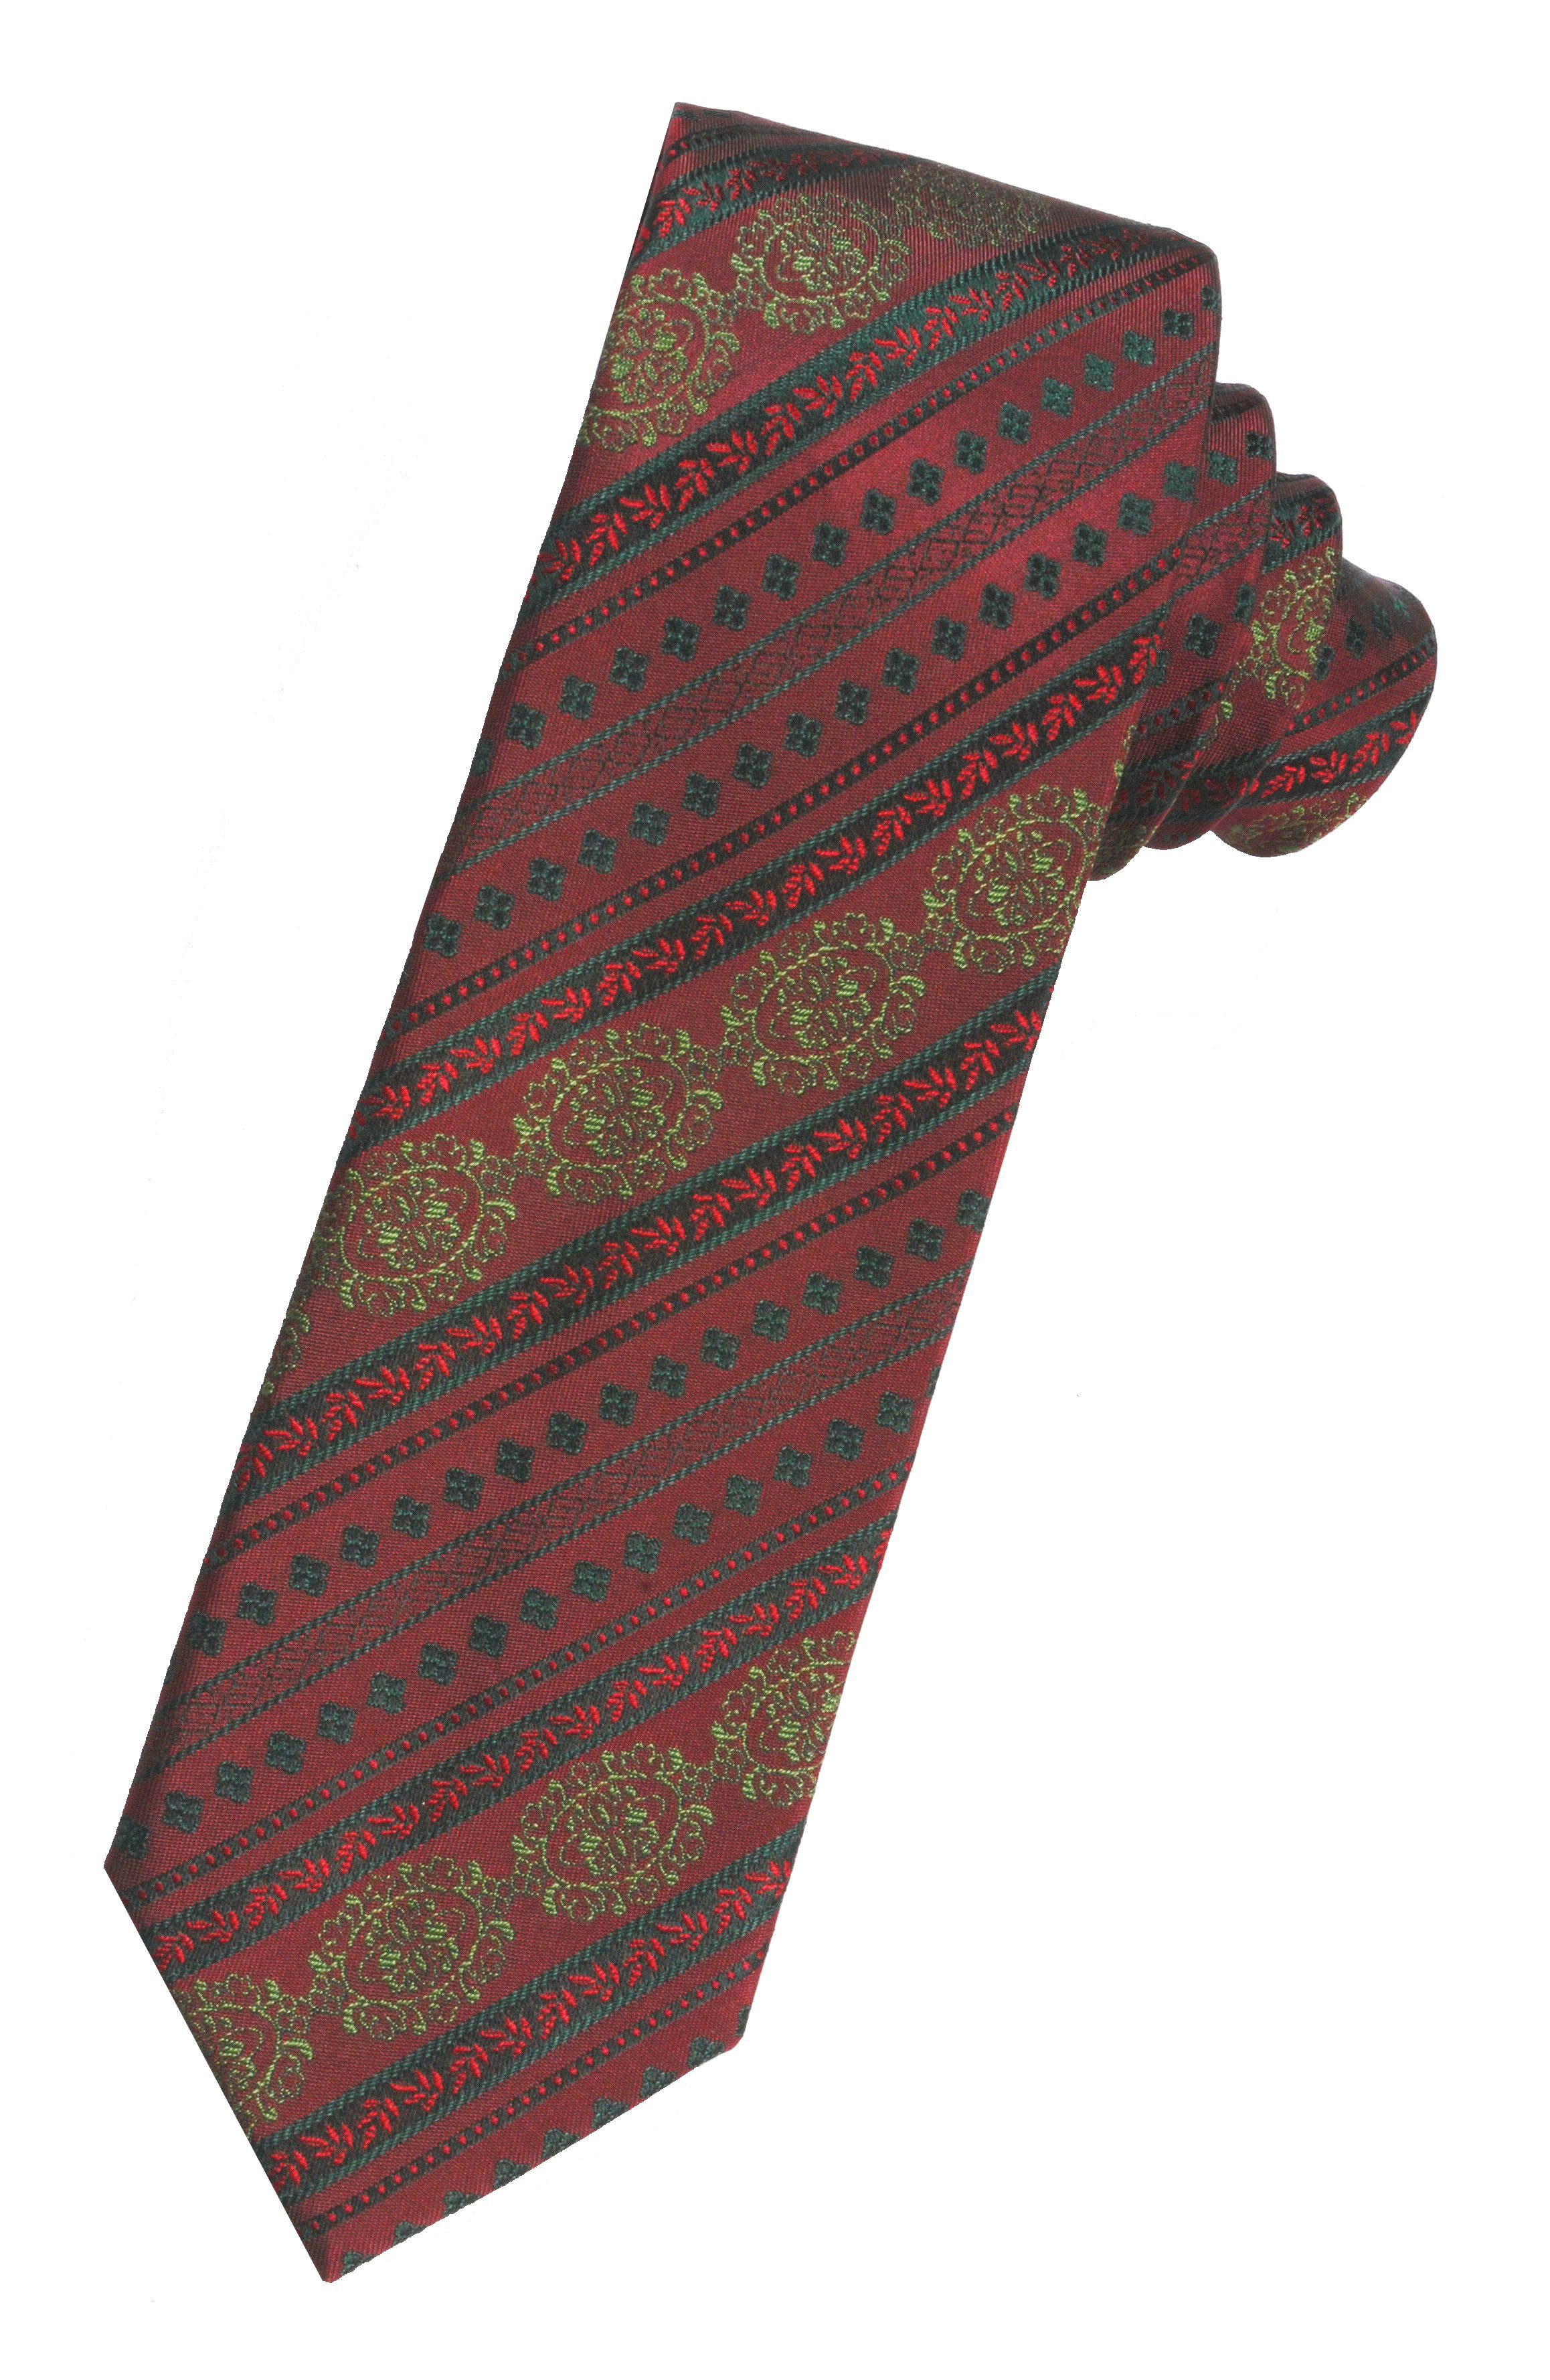 Seidenkrawatte Krawatte Herrenkrawatte Krawatte Moschen-Bayern Seide Herren Rot-Grün Wiener Trachtenkrawatte edler 100% Seiden-Jacquard